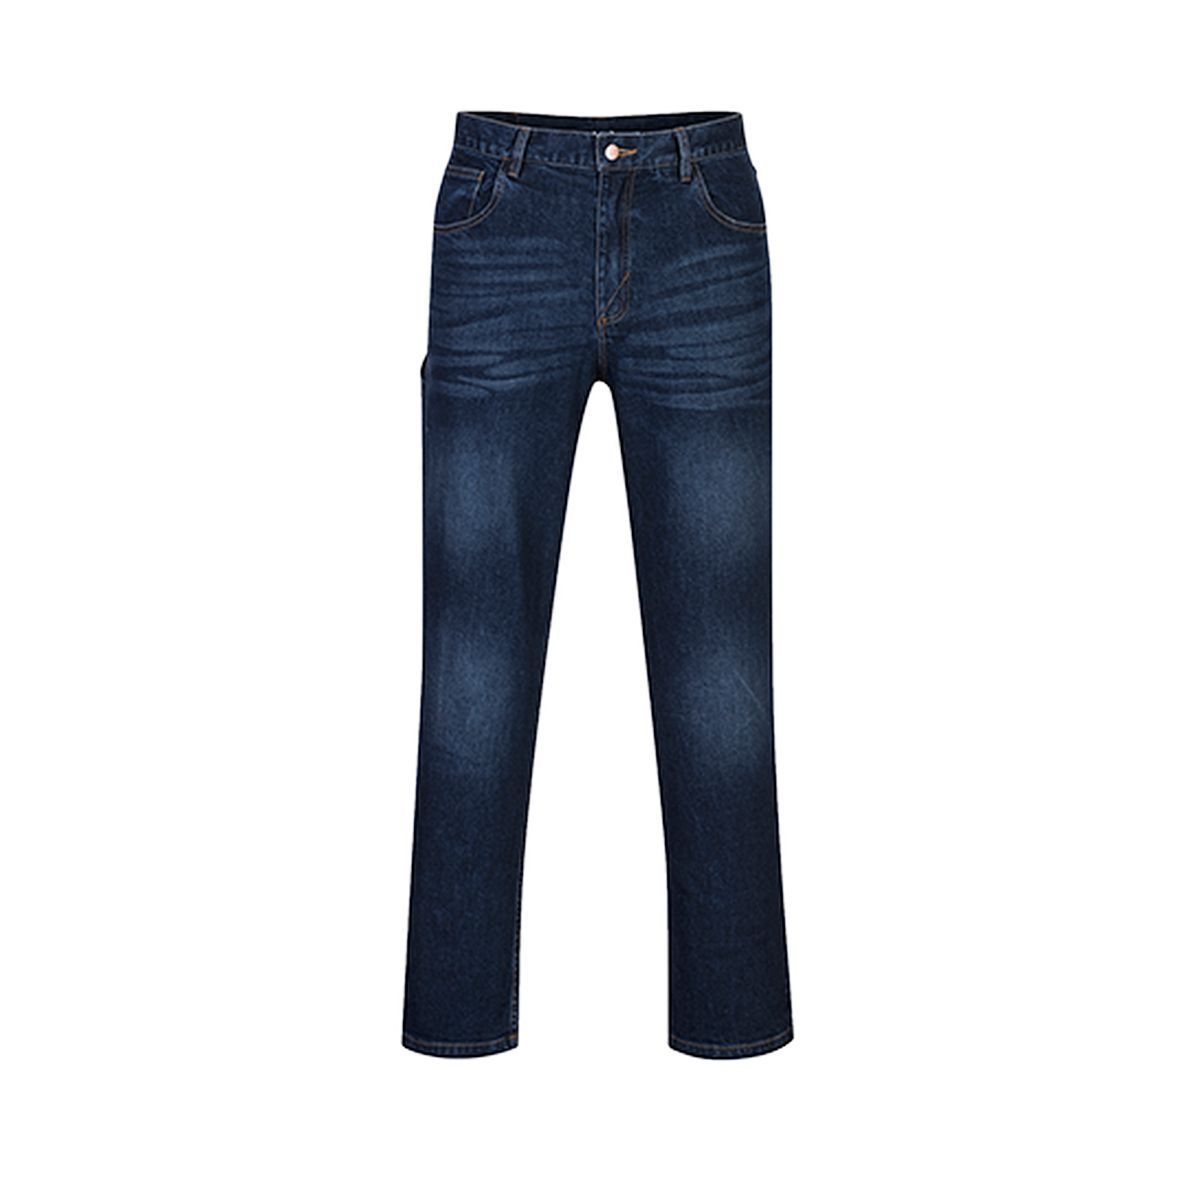 Style FR54 Style FR54 FR Stretch Denim Jeans-2